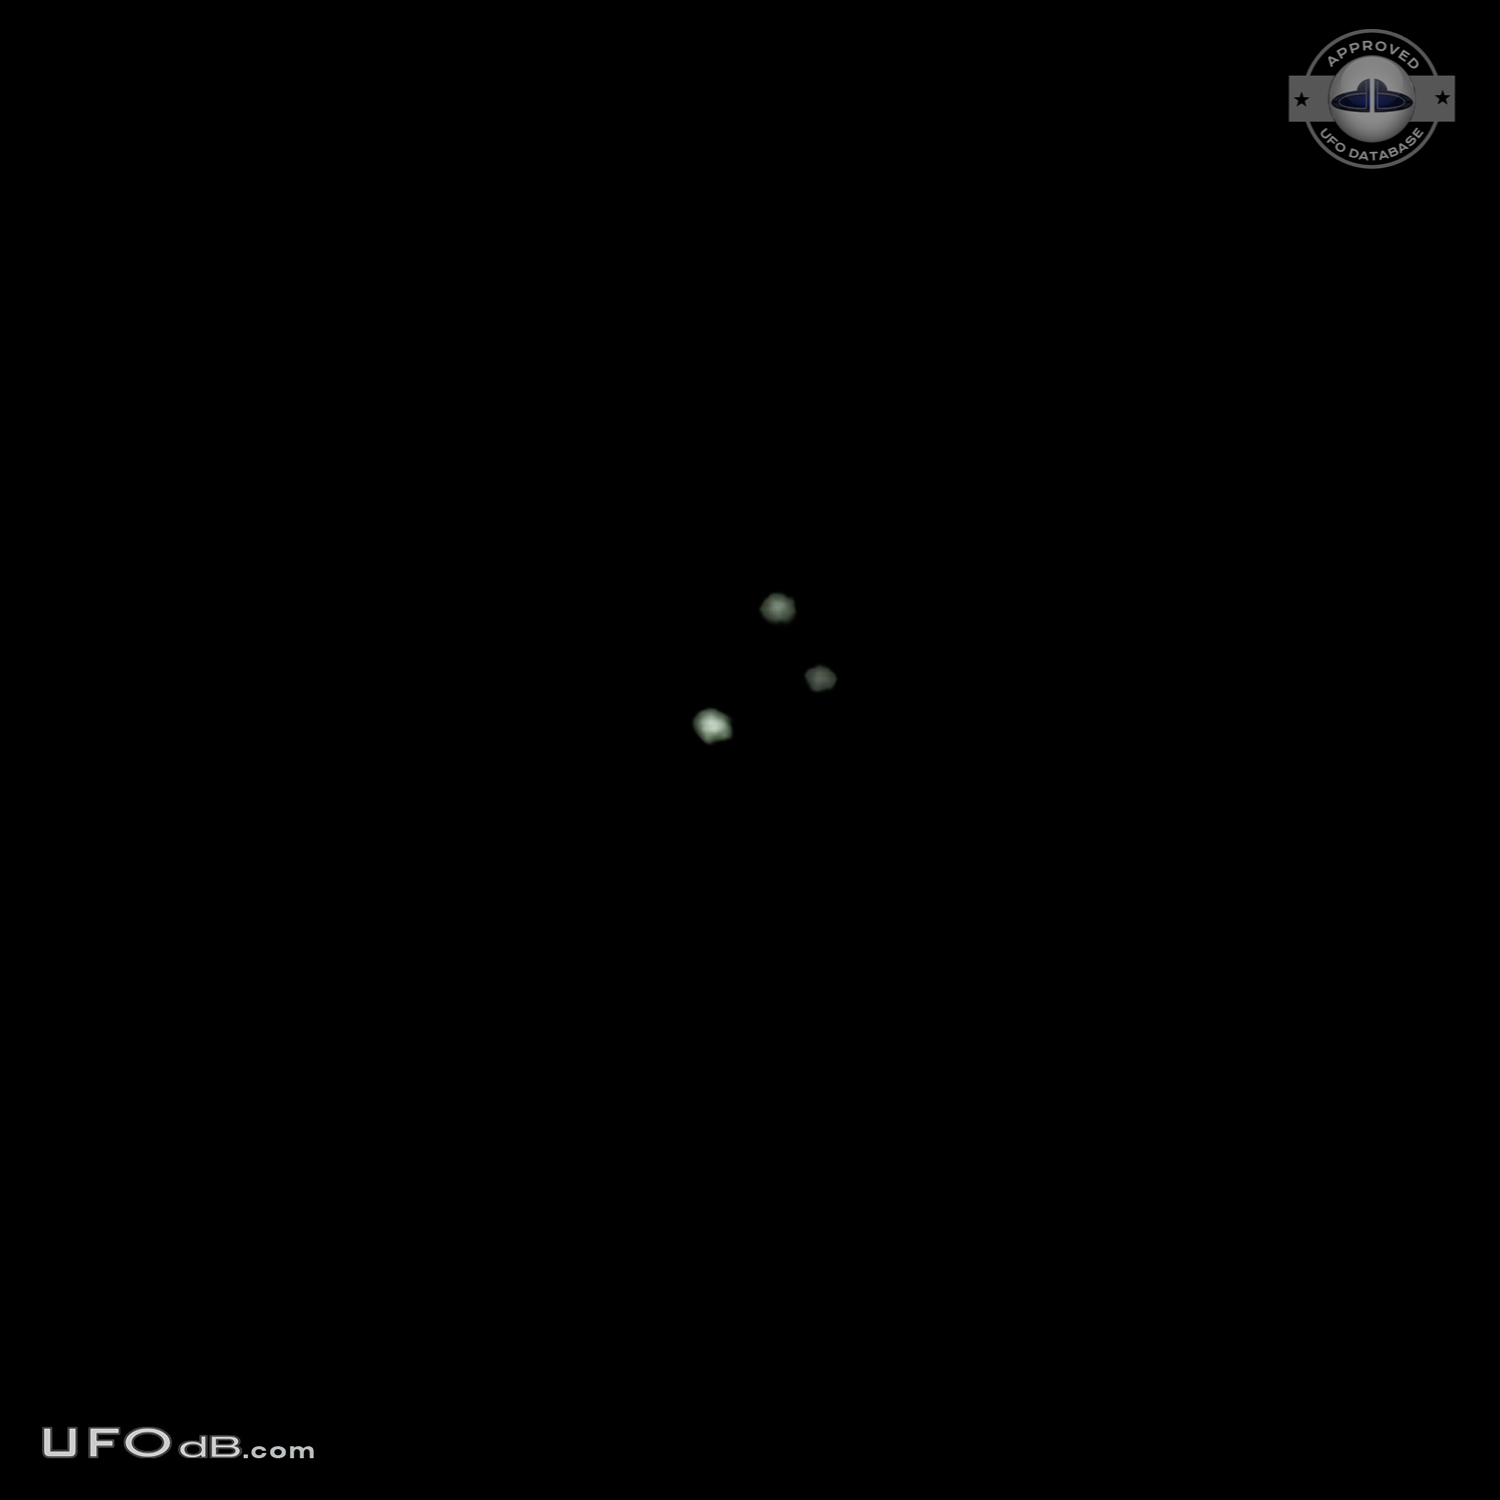 Battlestar Galactica UFO caught on Picture in Massachusetts - 2012 UFO Picture #422-1